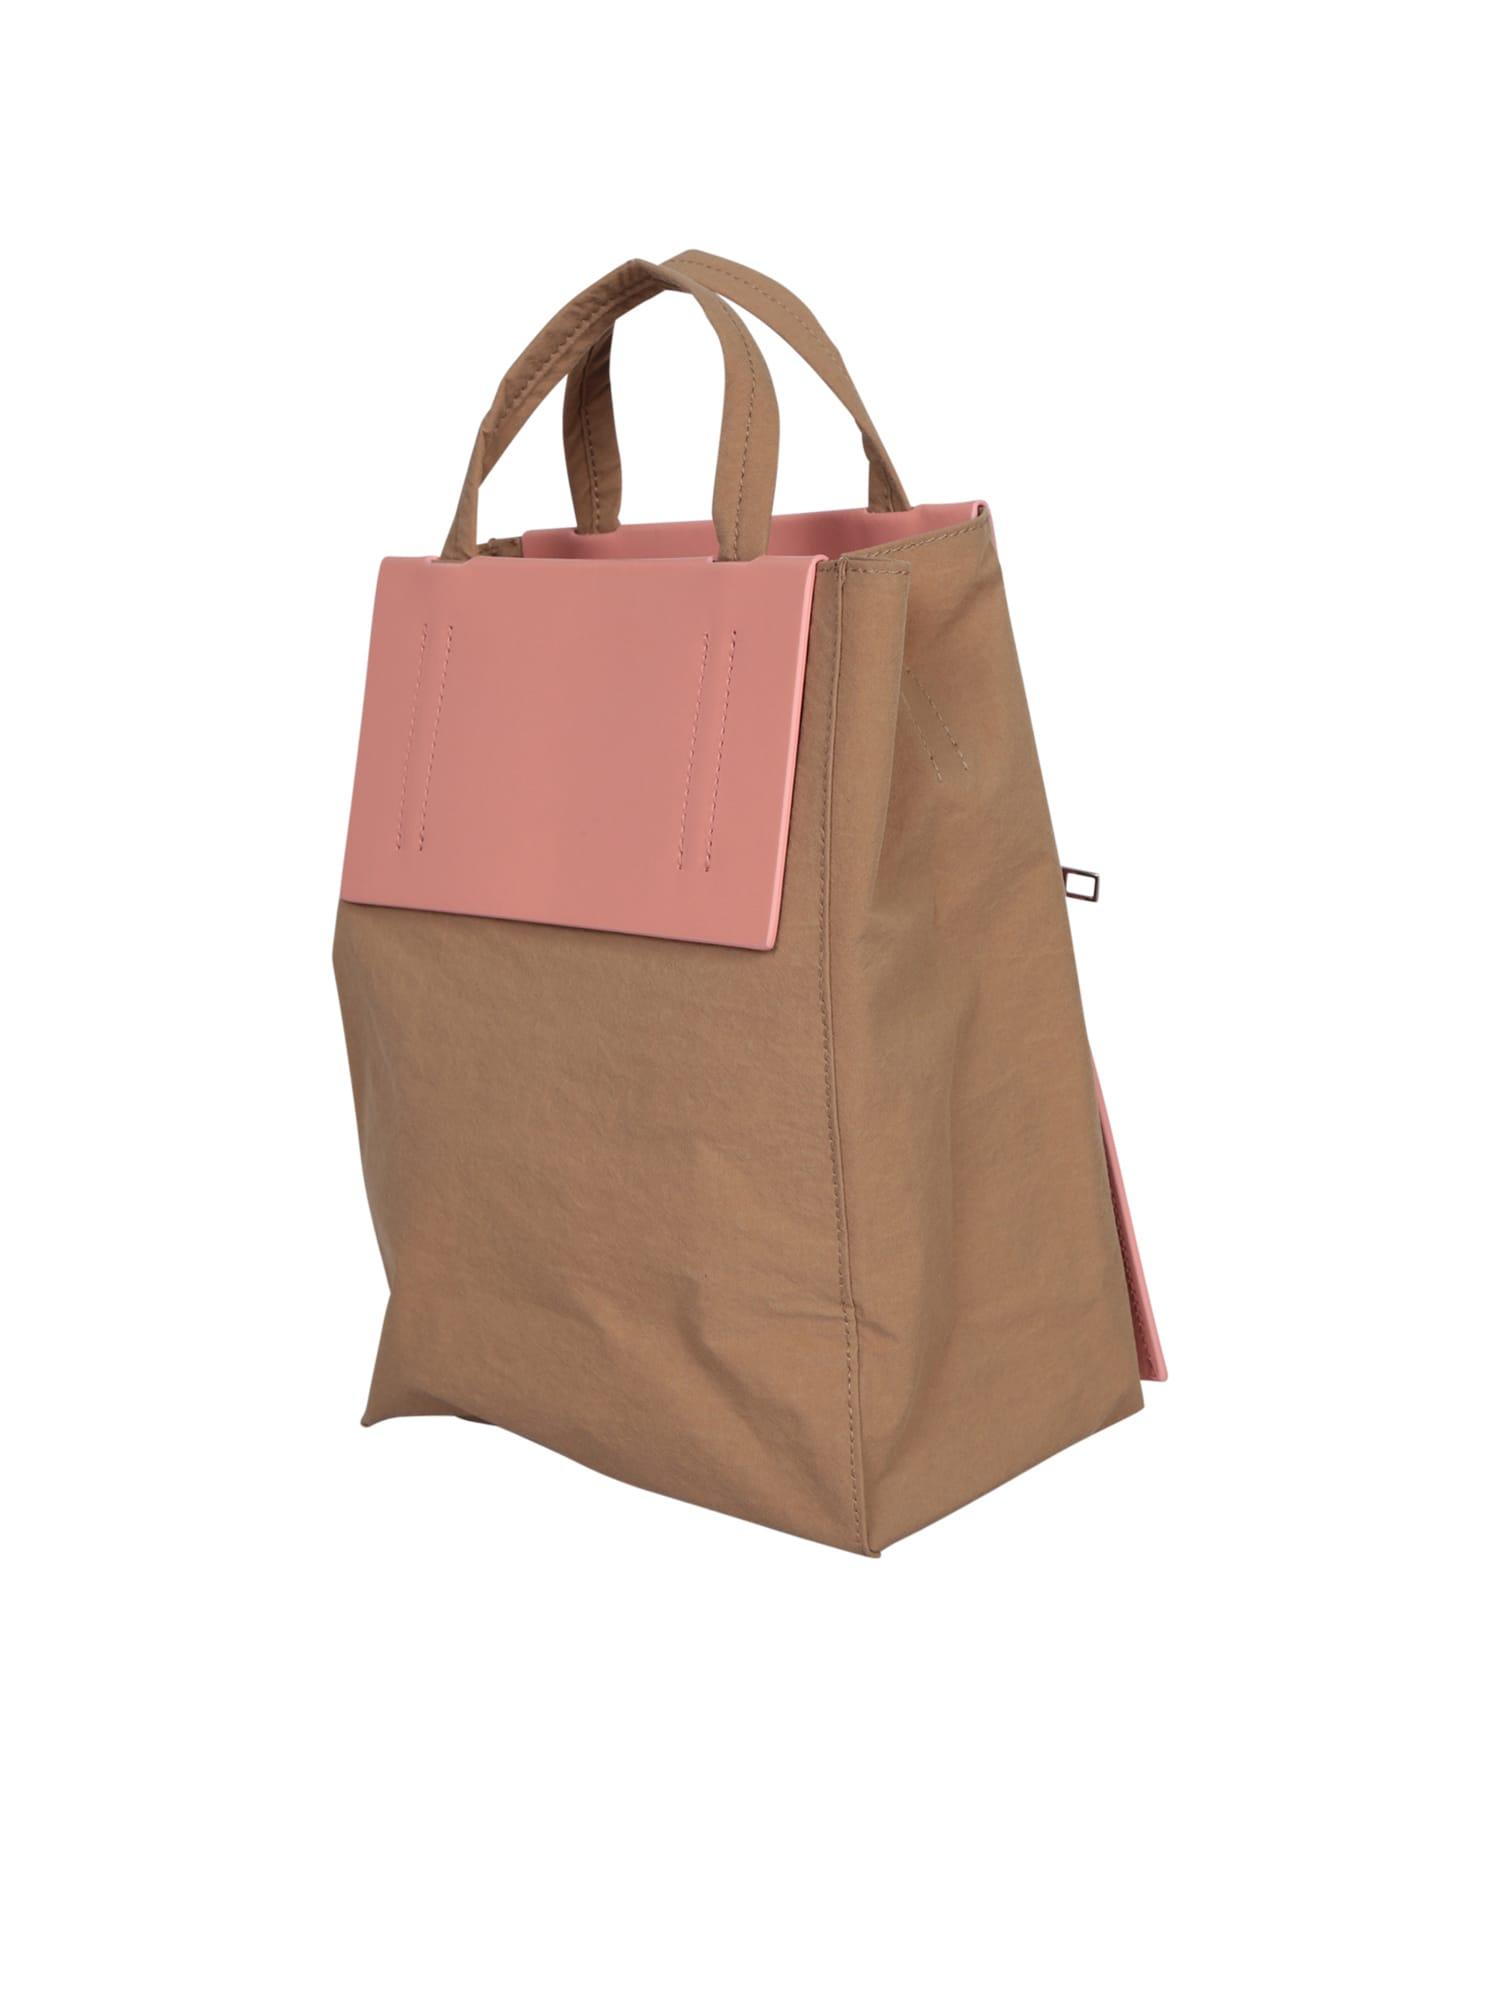 Acne Studios Bags in Pink for Men | Lyst